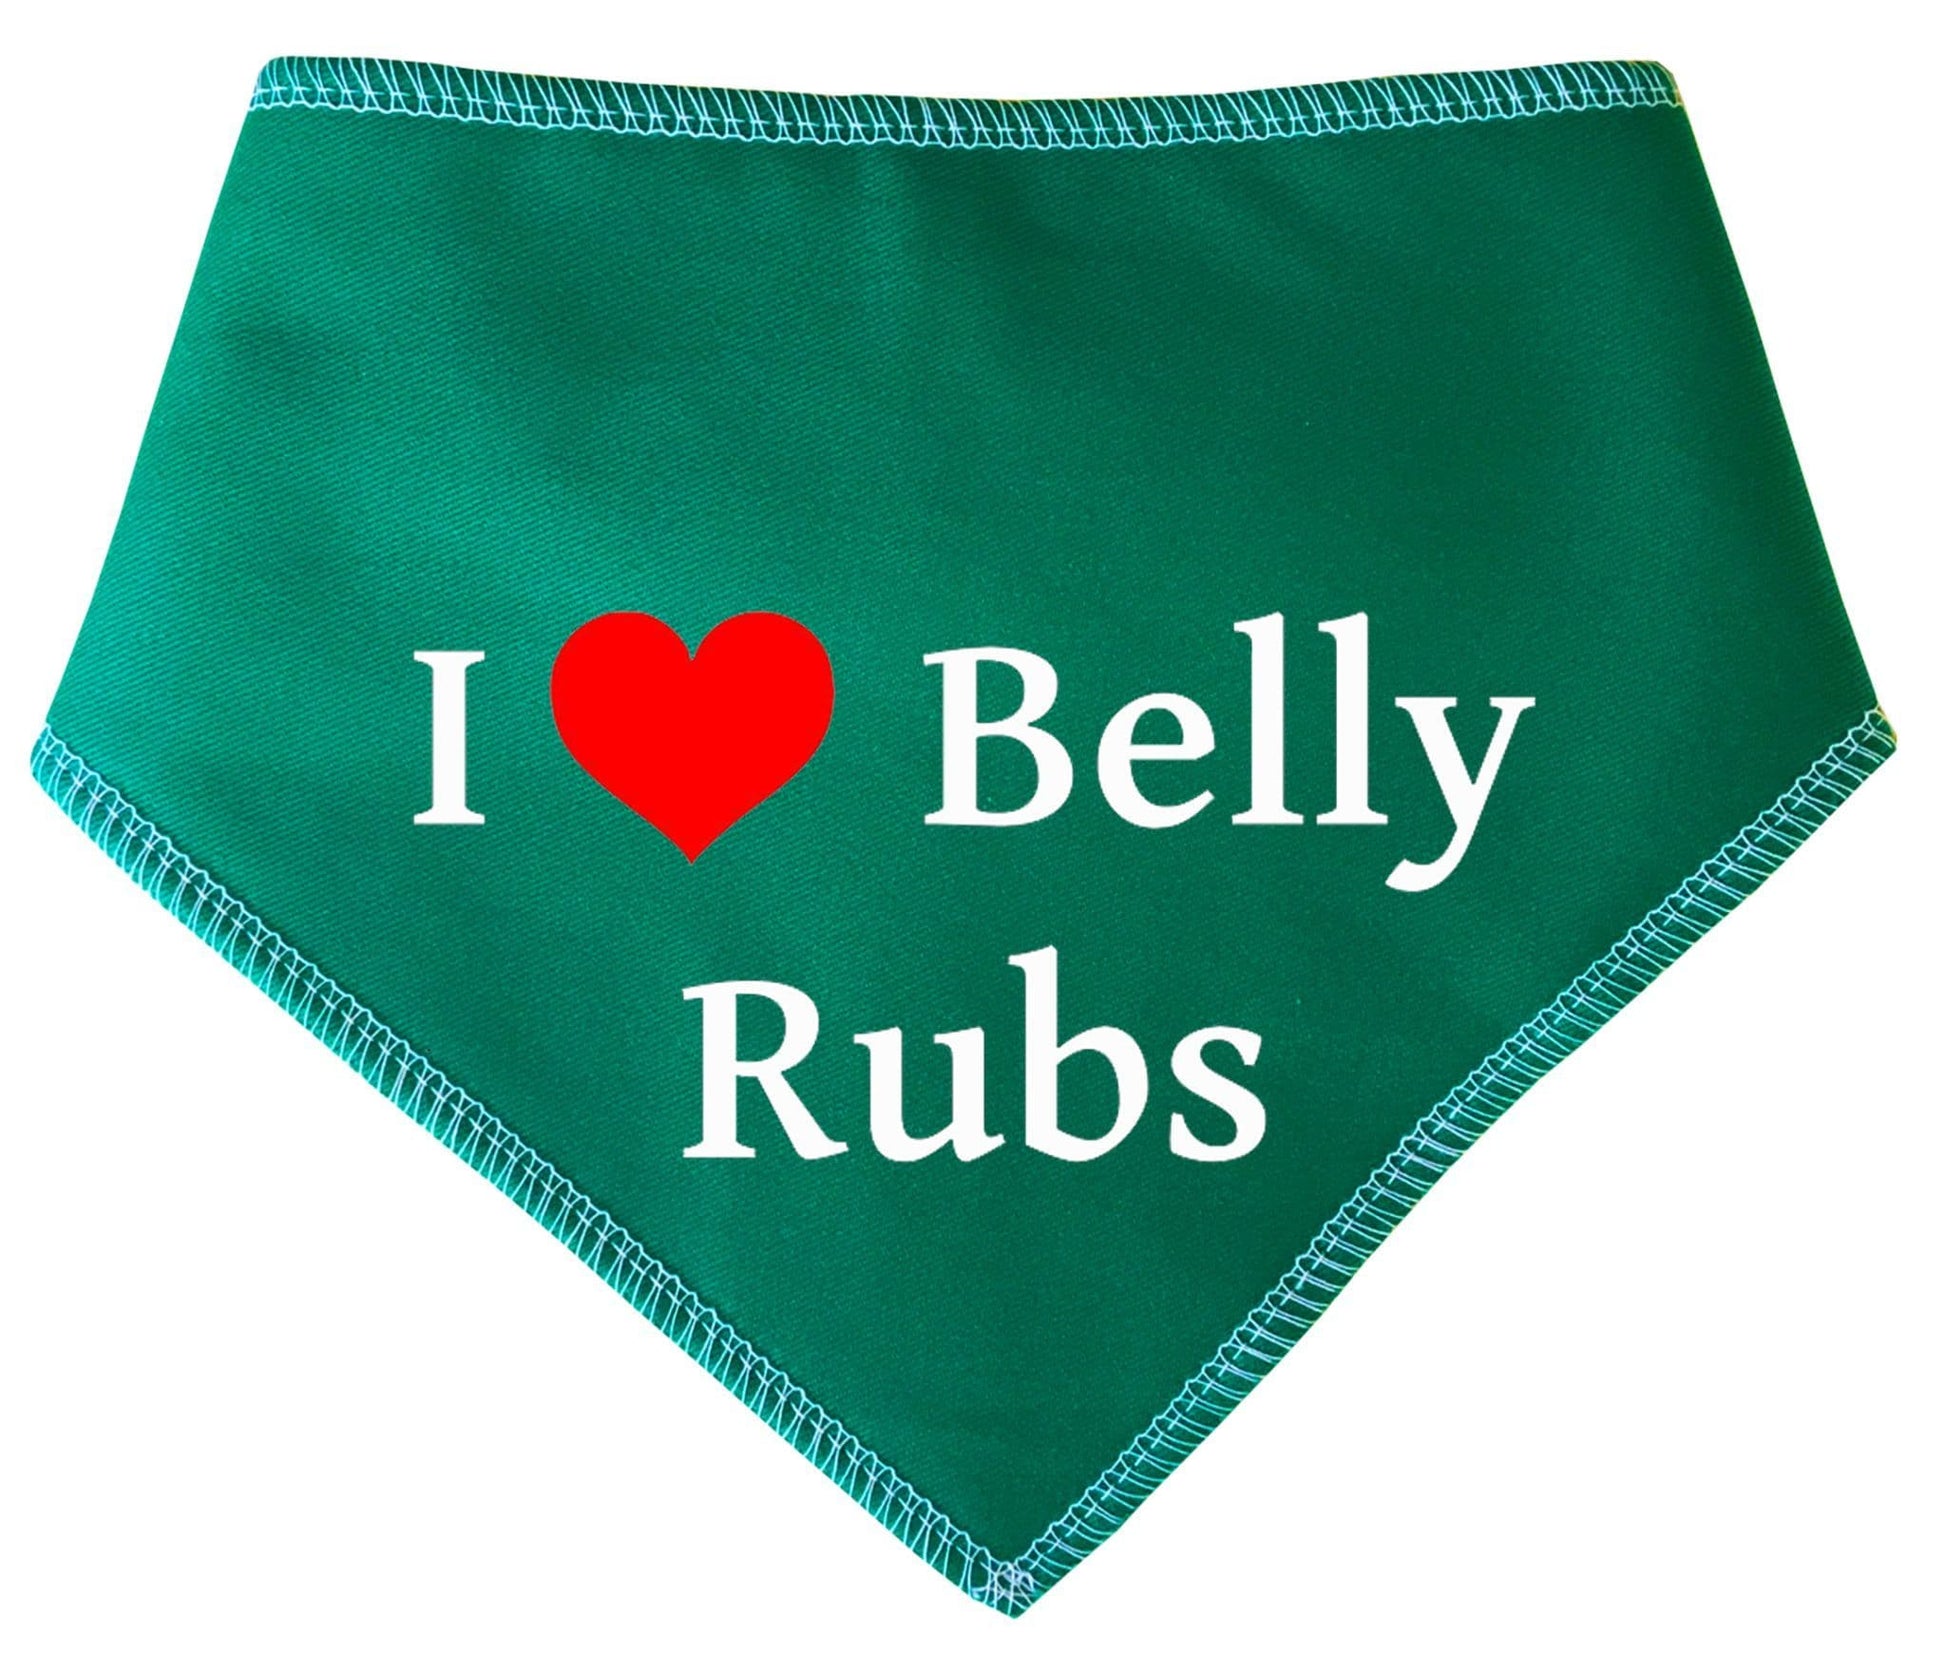 'I Love Belly Rubs' Dog Bandana